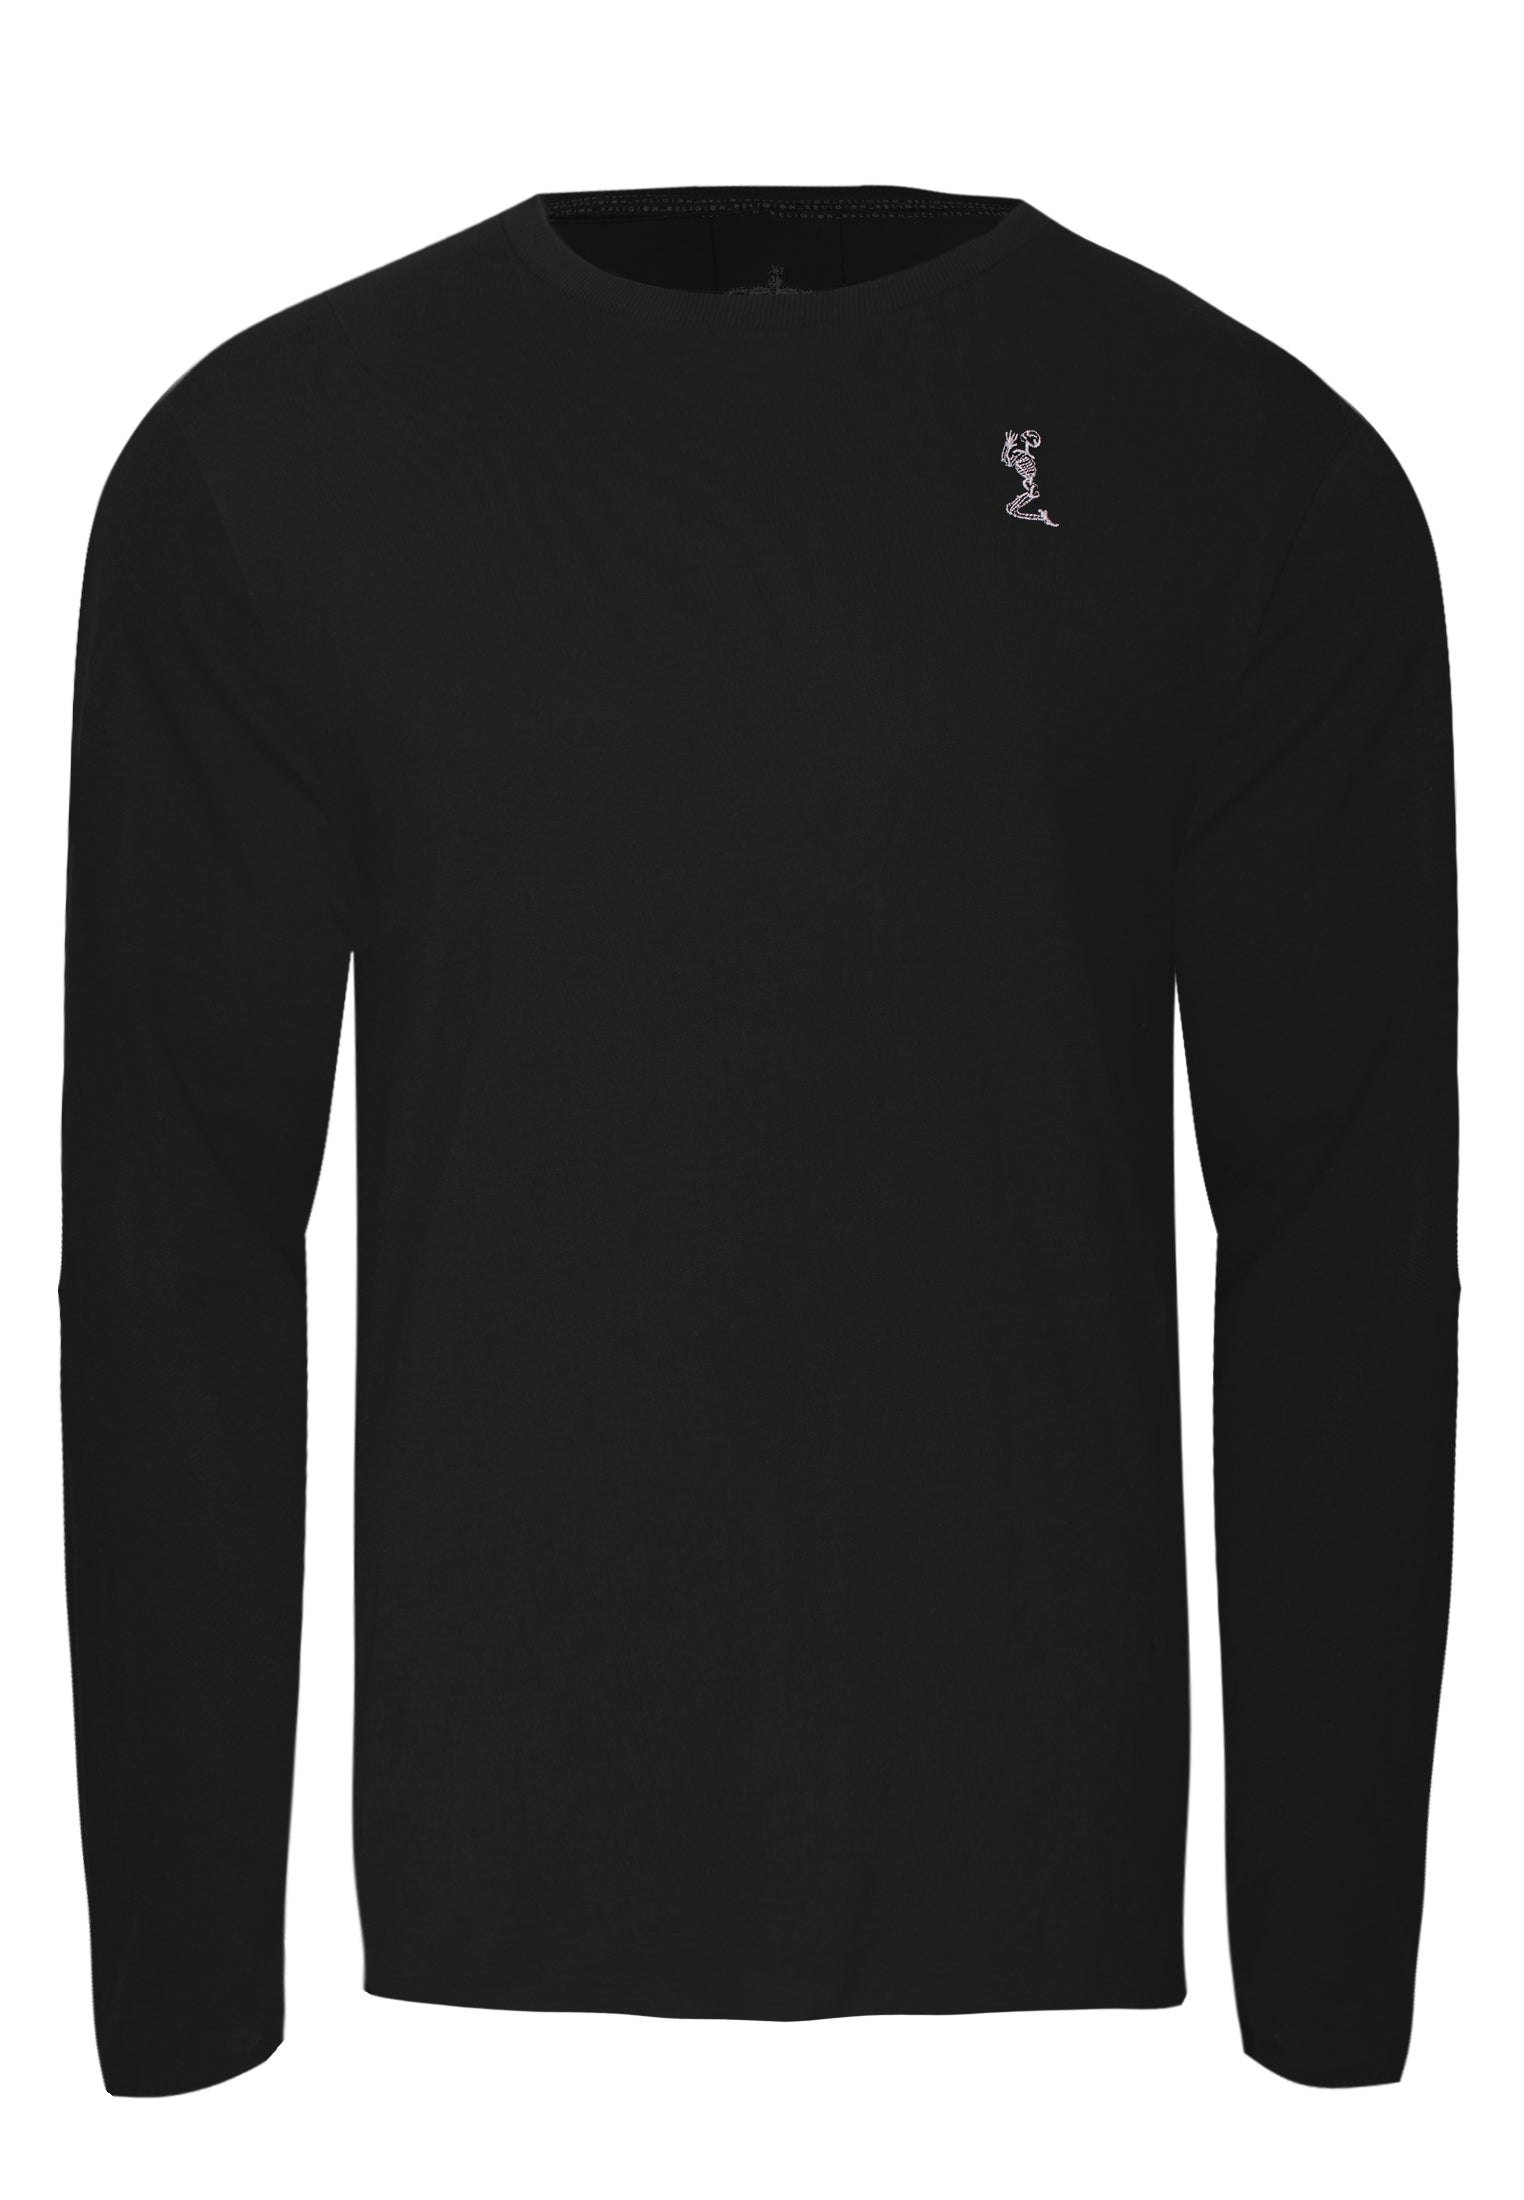 RELIGION Core Organic Long Sleeve Black T-Shirt